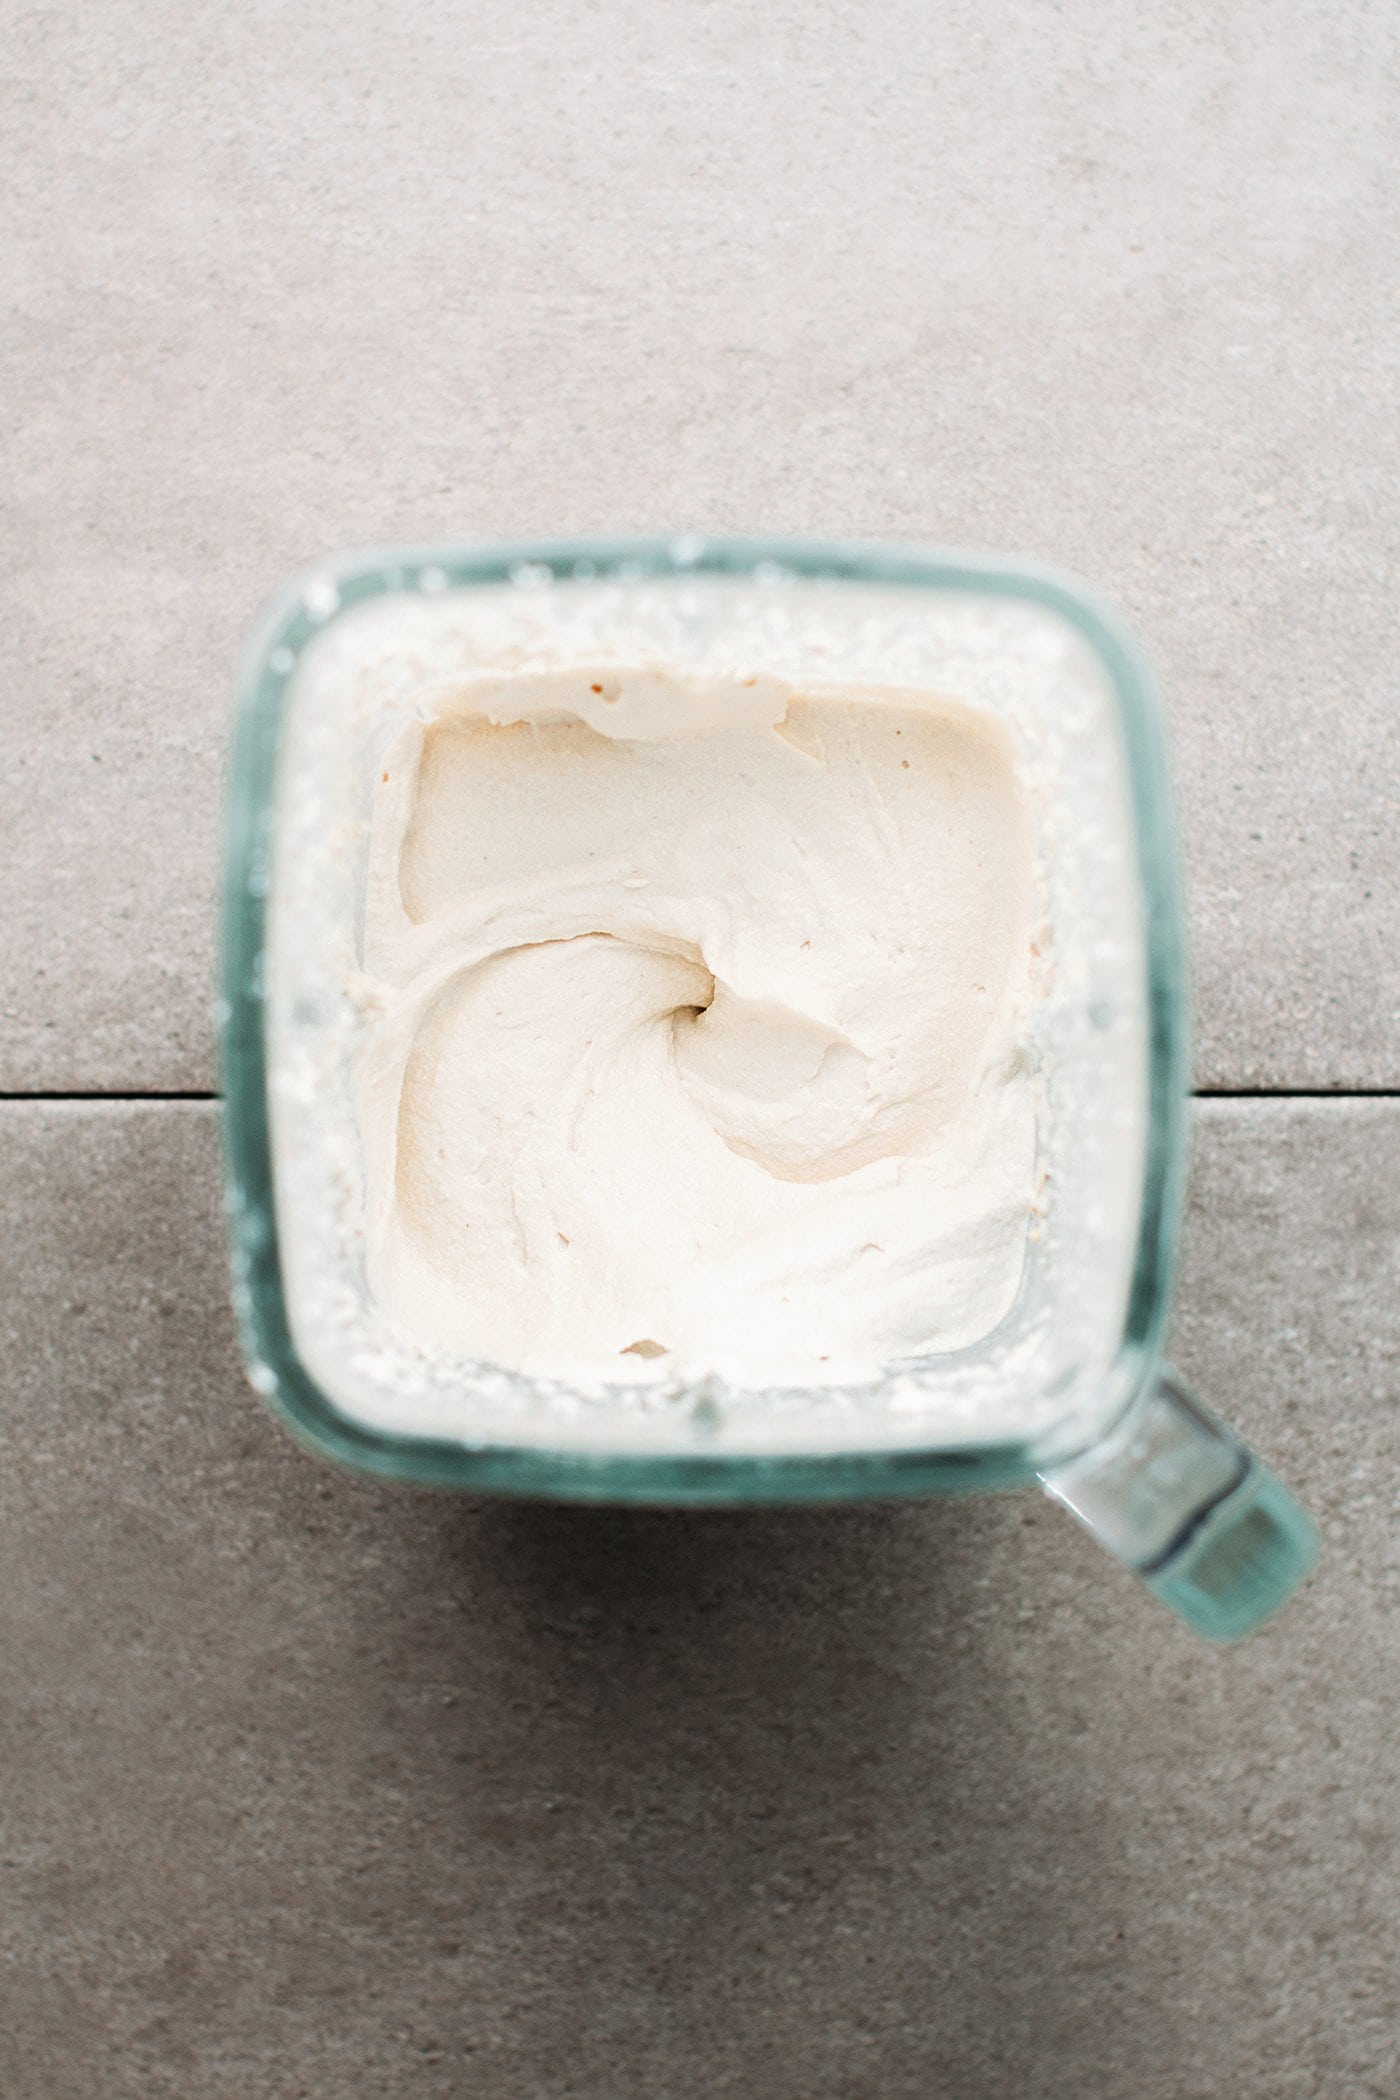 Vegan cream cheese in a blender